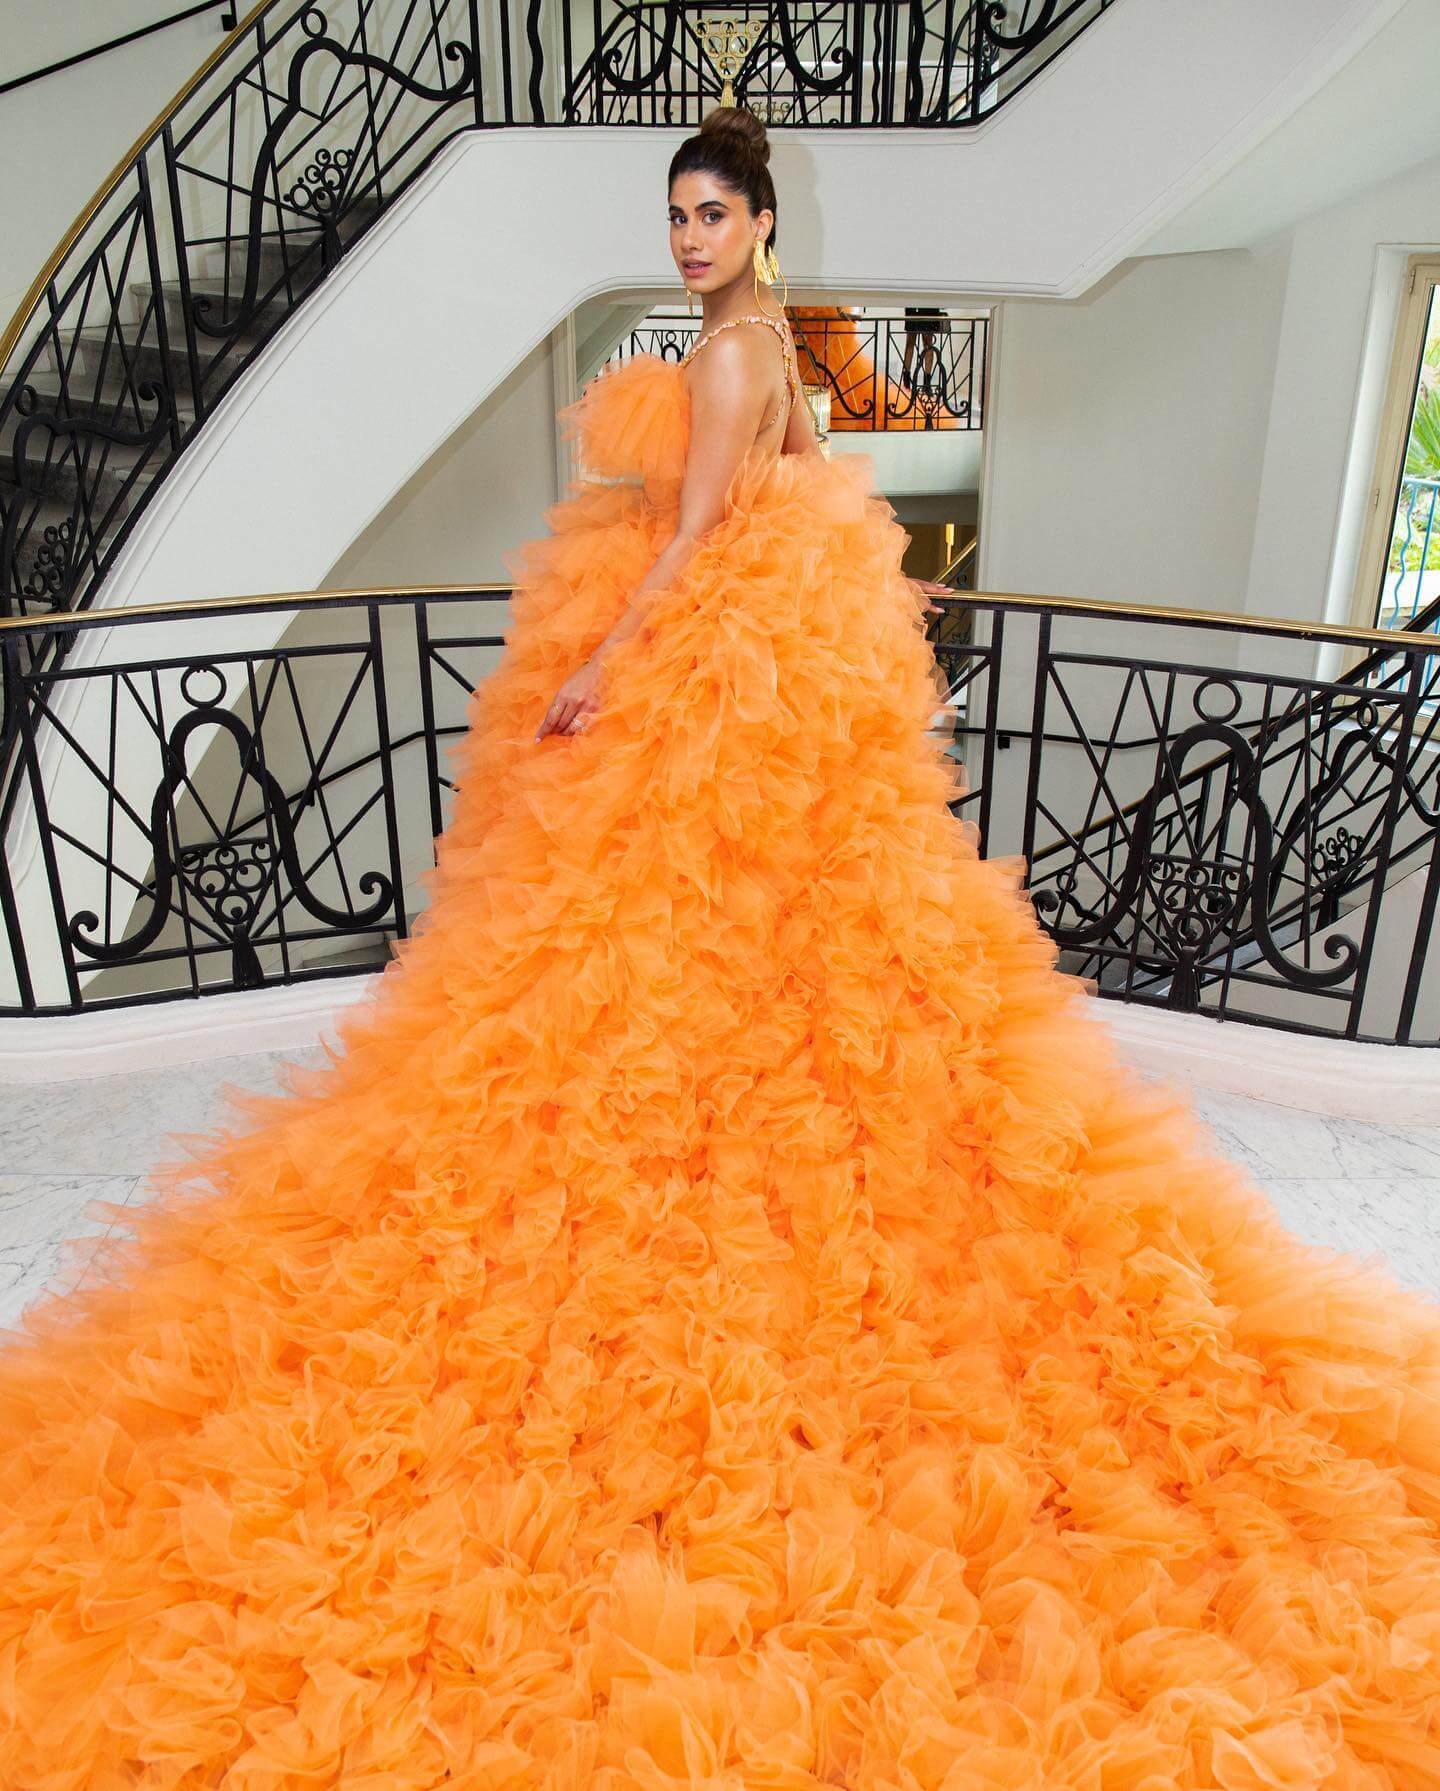 Social Media Personality Malvika Sitlani Cannes Look In Orange Full Ruffled Gown With Sleek Hair Bun